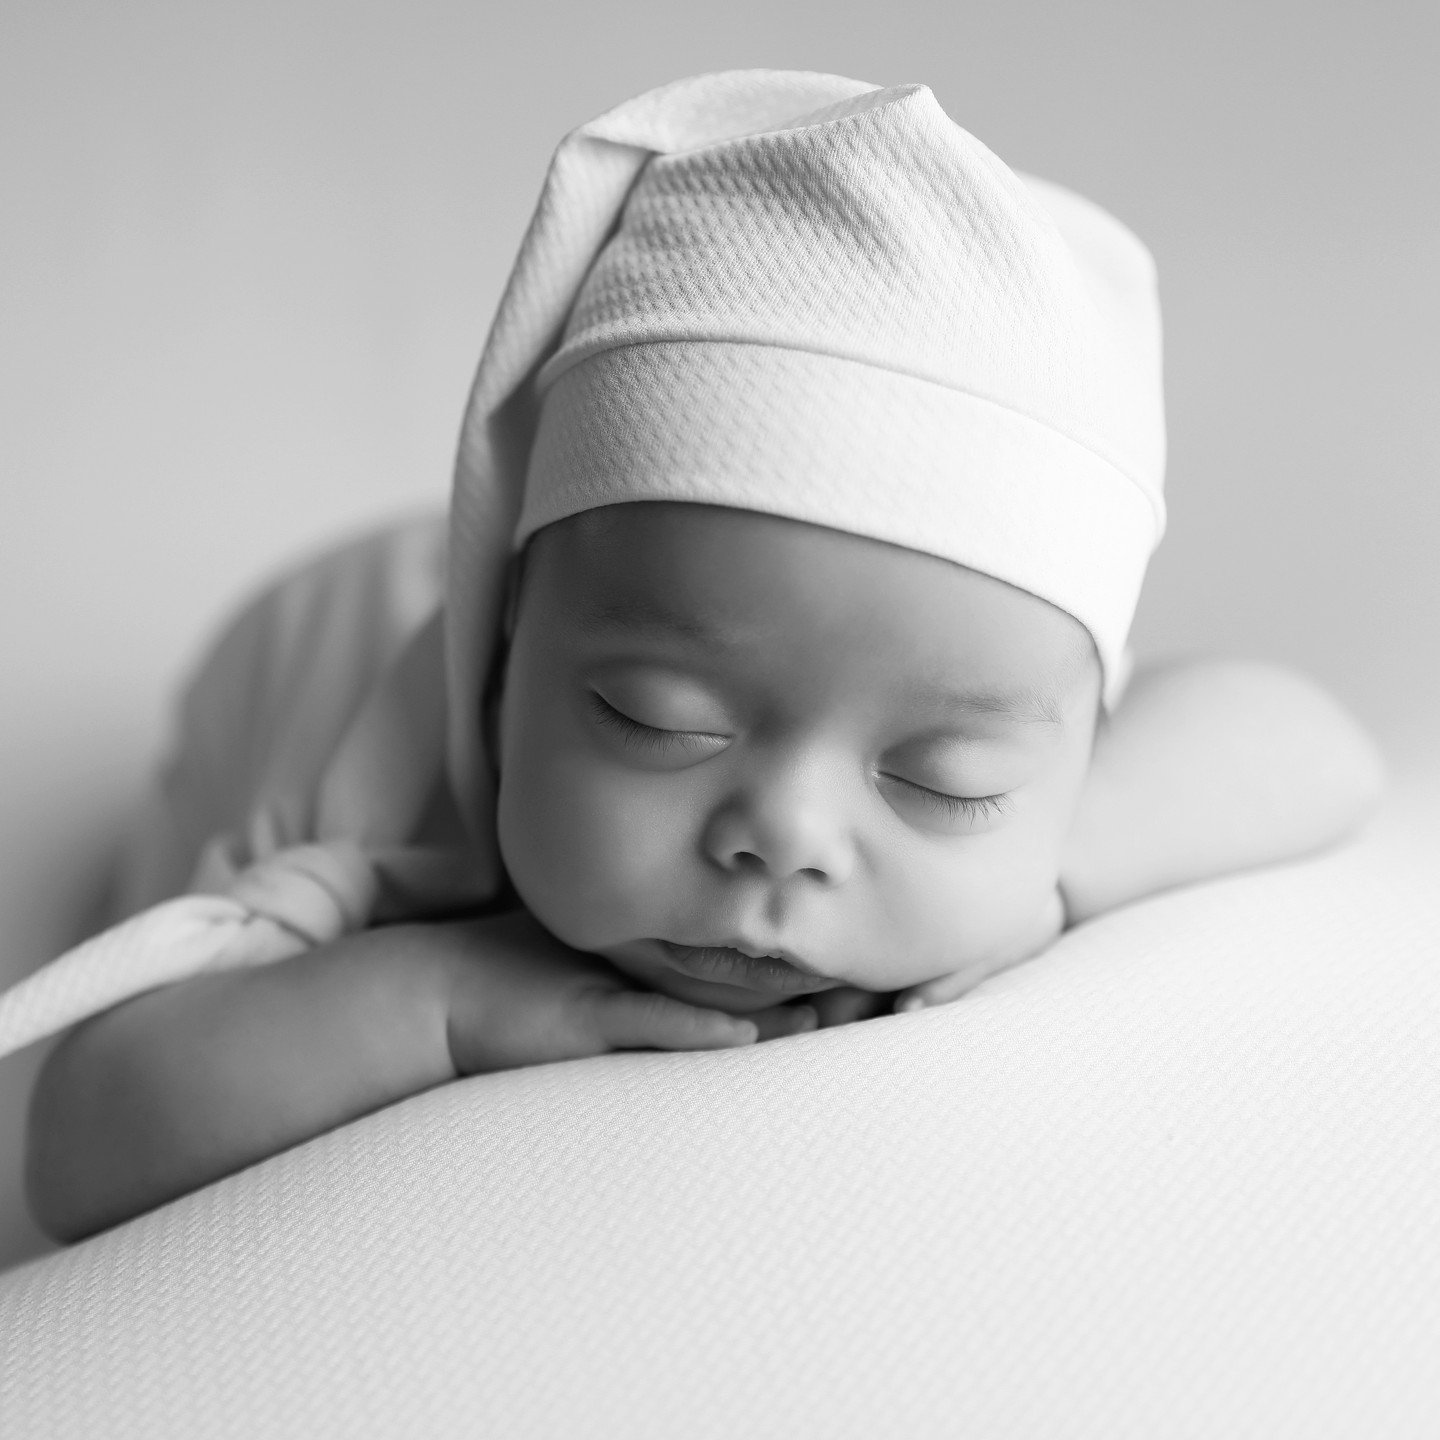 baby Jack...➡️www.anabrandt.com

#NewbornPhotography
#CaliforniaPhotographer
#CelebrityPhotographer
#NewbornPosing
#PhotographyTips
#BehindTheScenes
#BTSPhotography
#newbornPhotographyTutorials
#newbornPhotographyInspiration
#NewbornPortraits
#tiktok